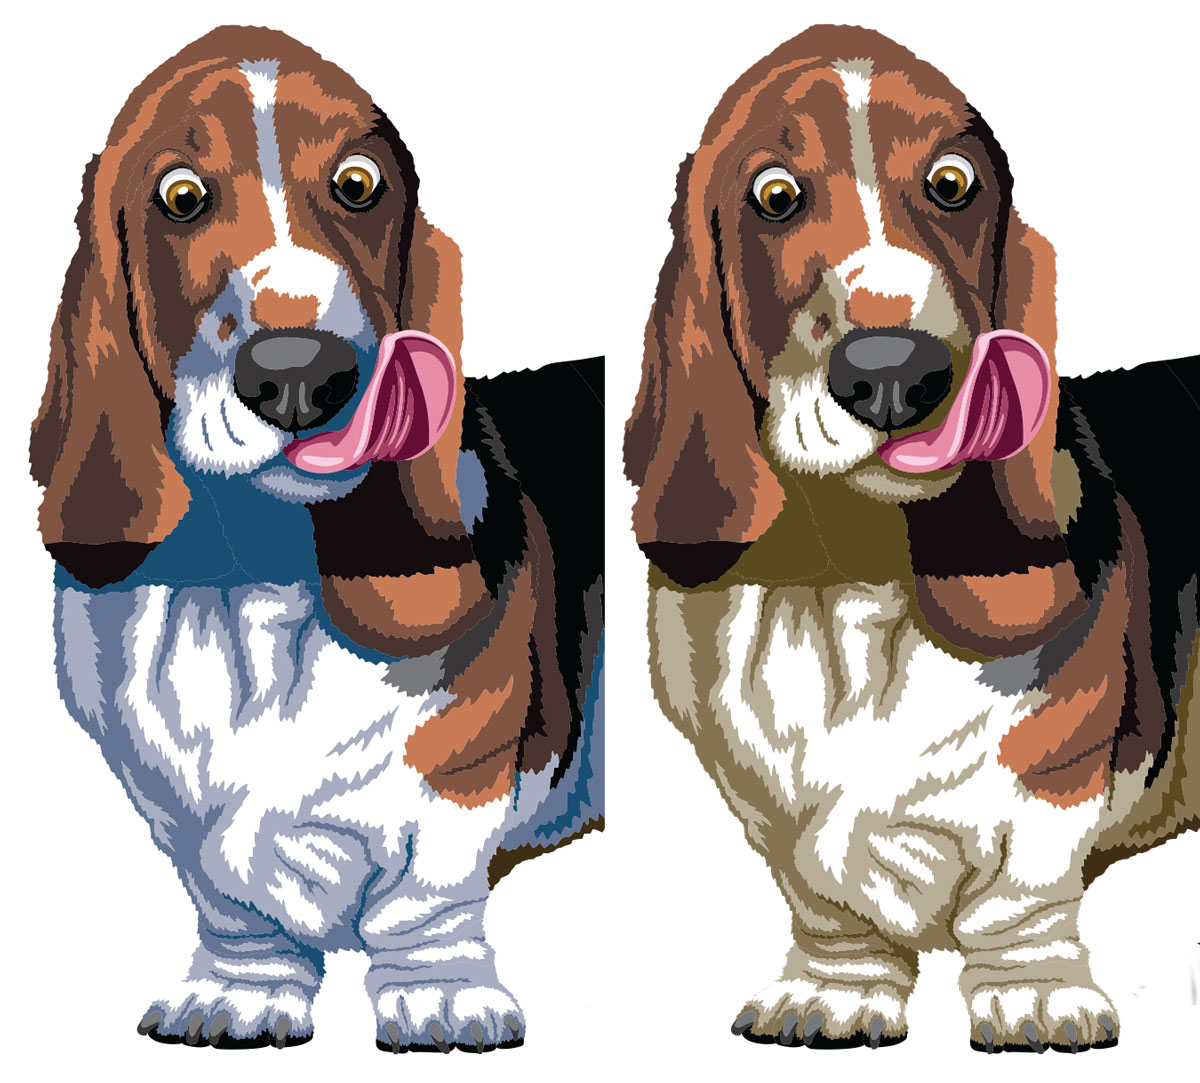 Comparison of dog's body colors